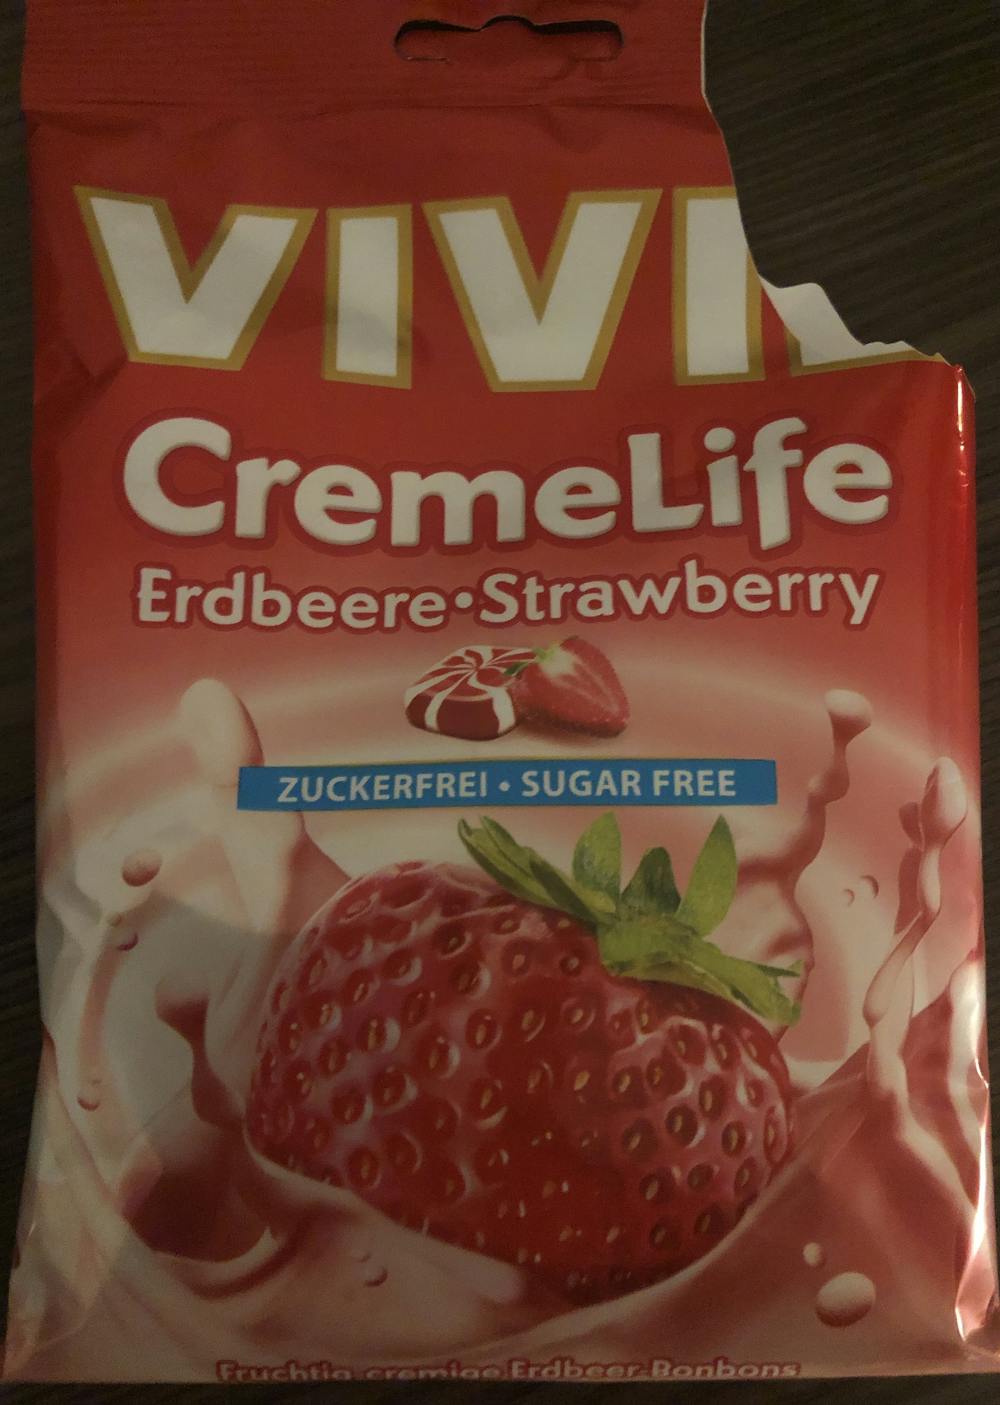 CremeLife strawberry, Vivk